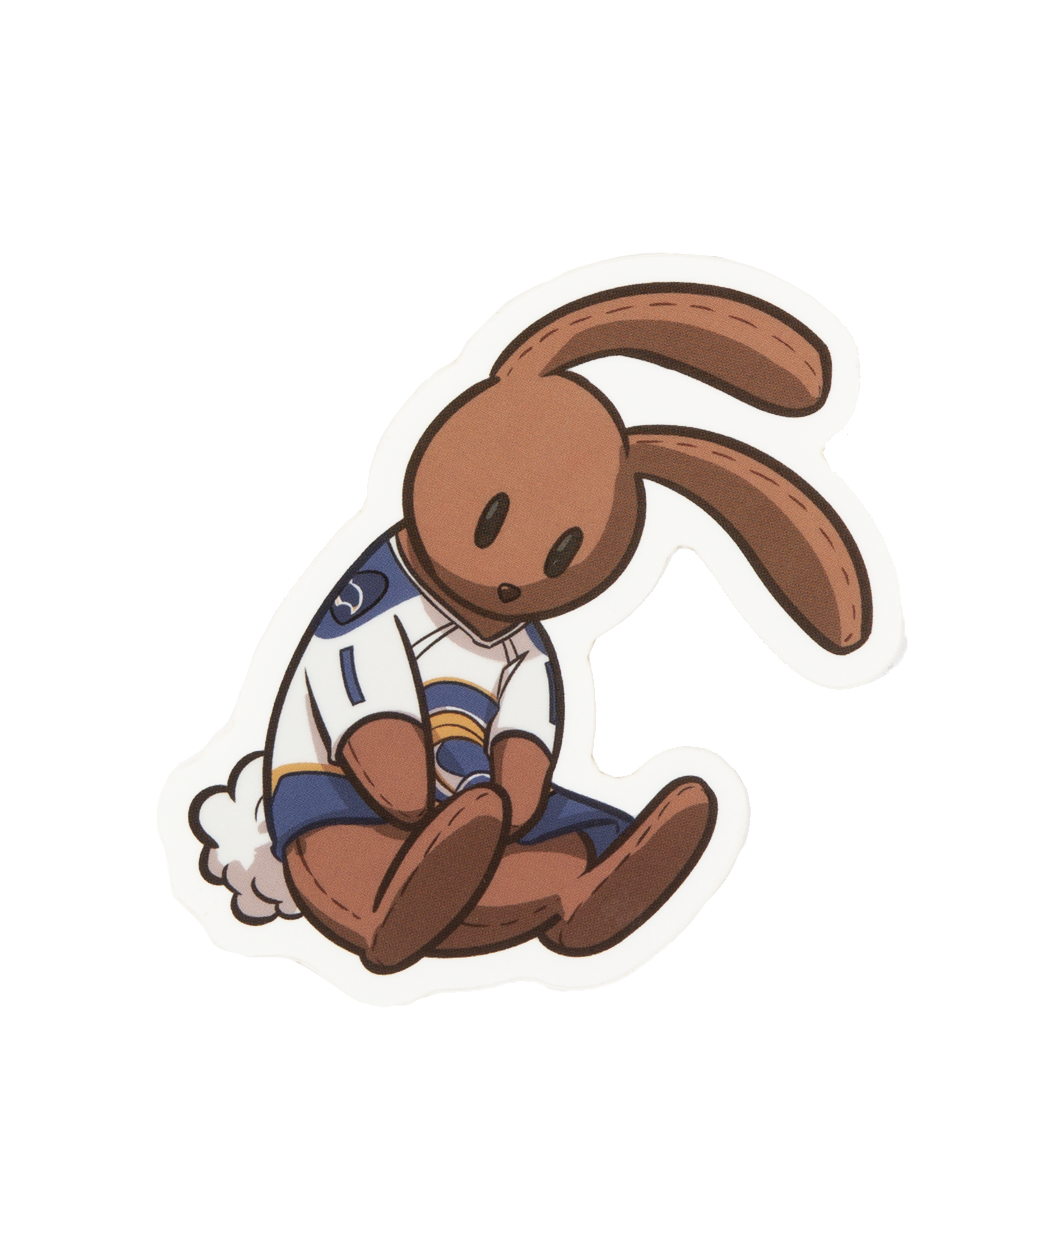 A sticker of a stuffed animal rabbit wearing a jersey.  